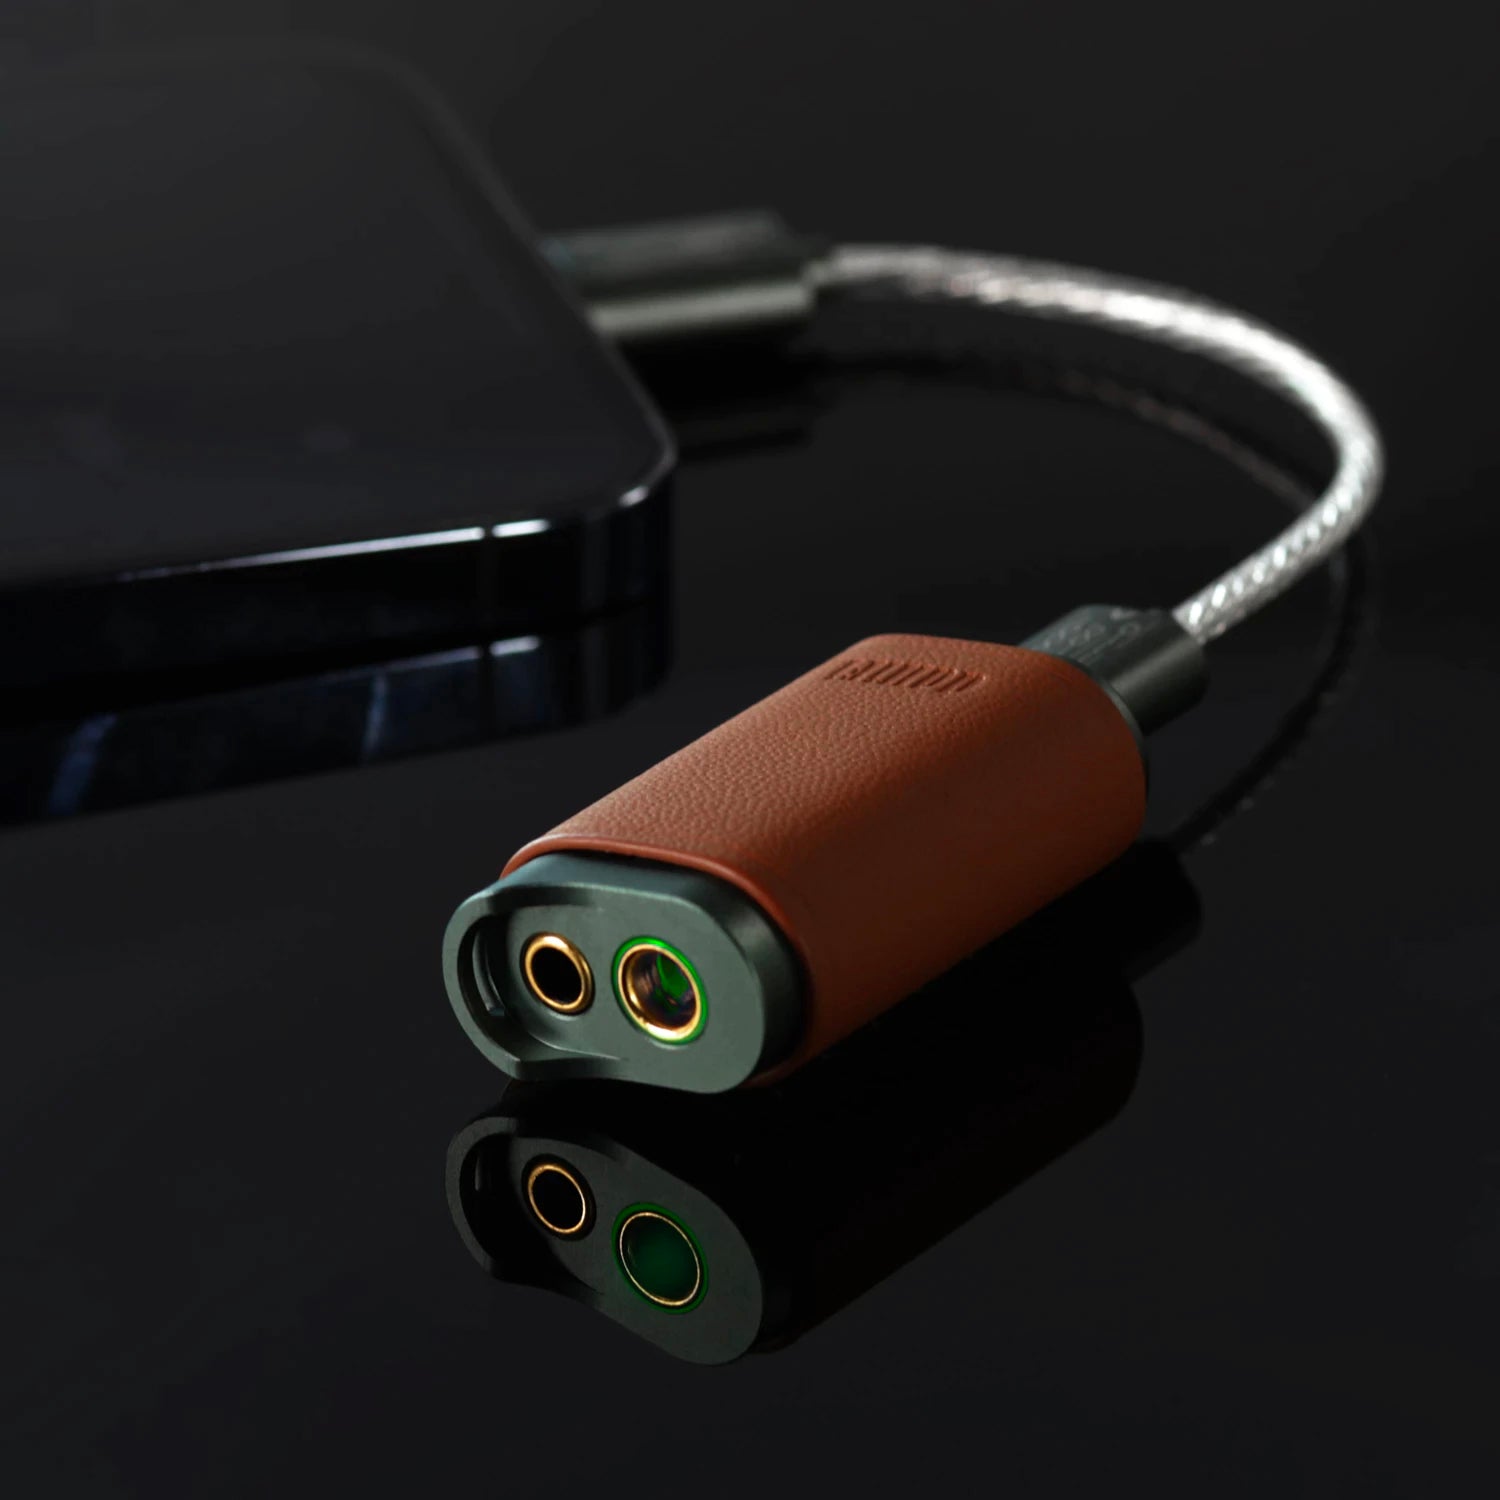 DD HiFi TC44C Latest USB DAC/AMP with Dual DAC and Balanced Headphone Support